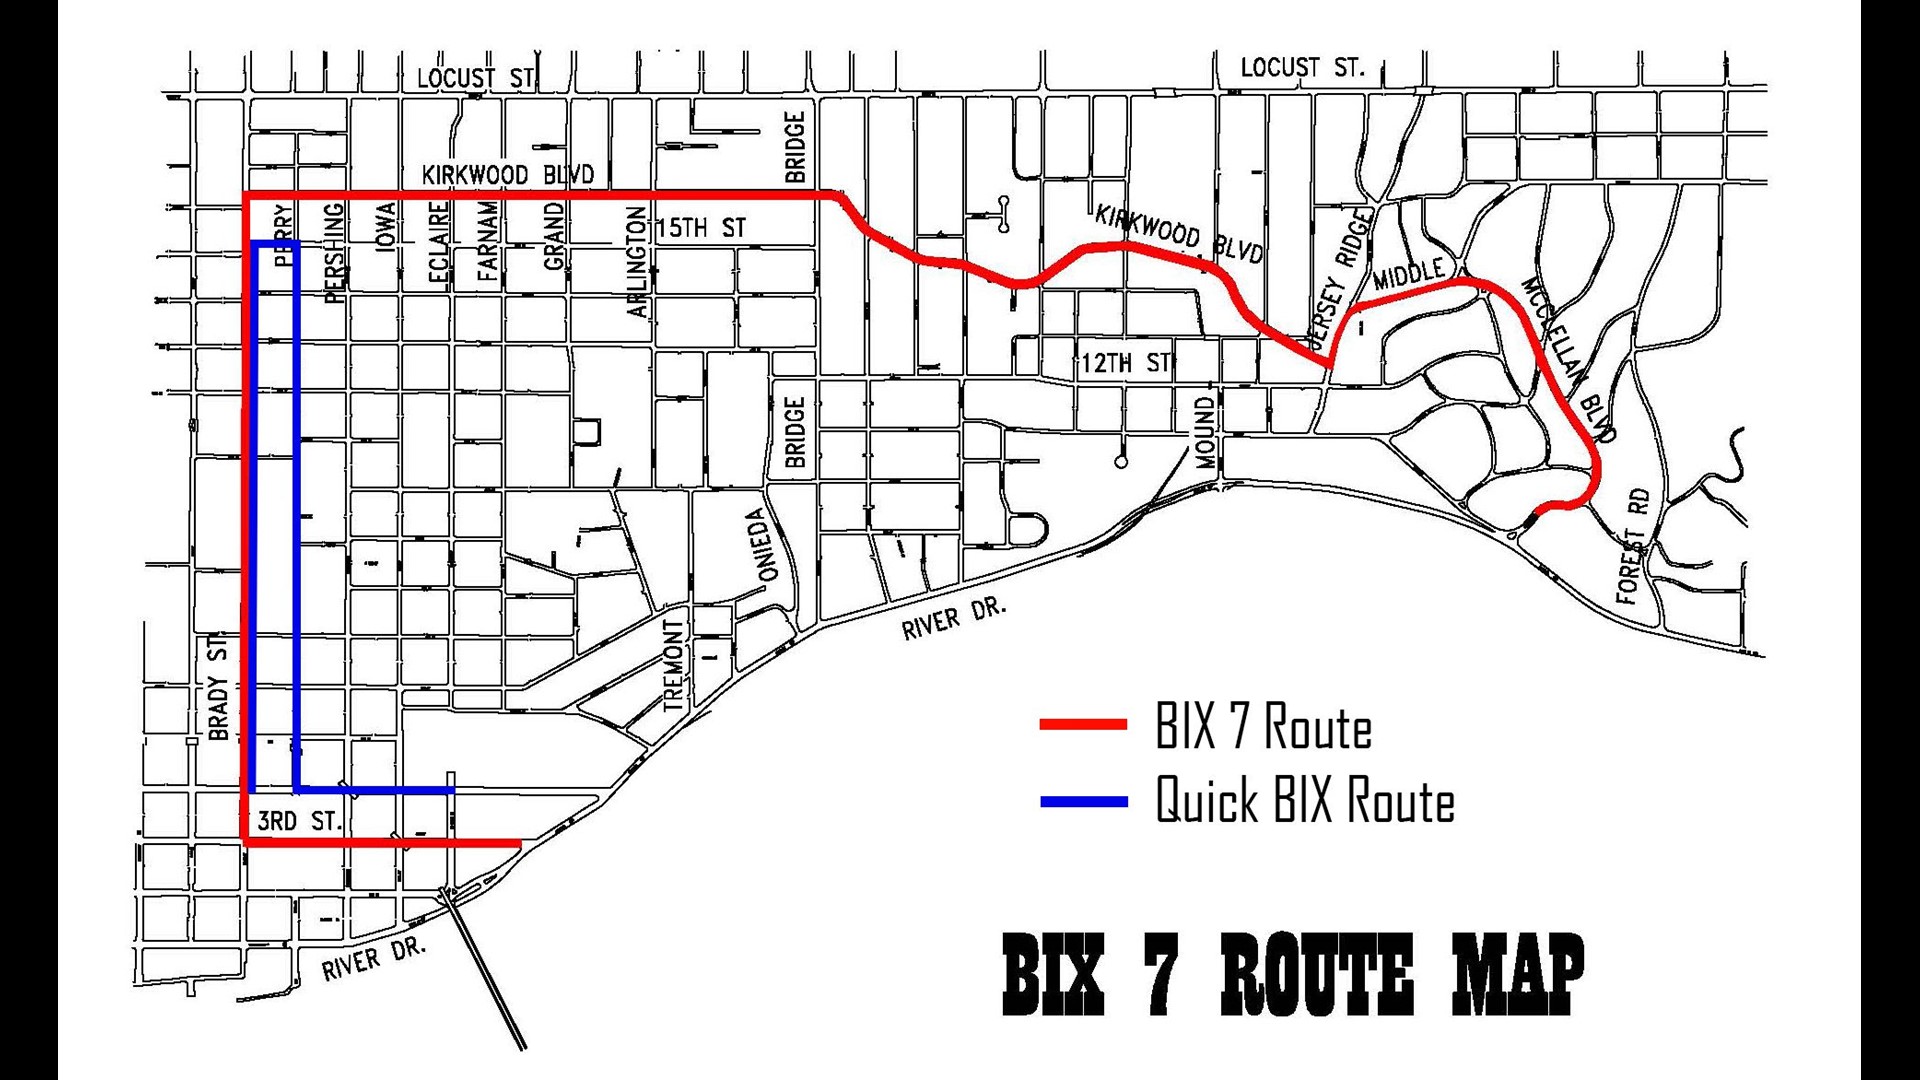 Bix weekend in Davenport Events, road closures, and parking